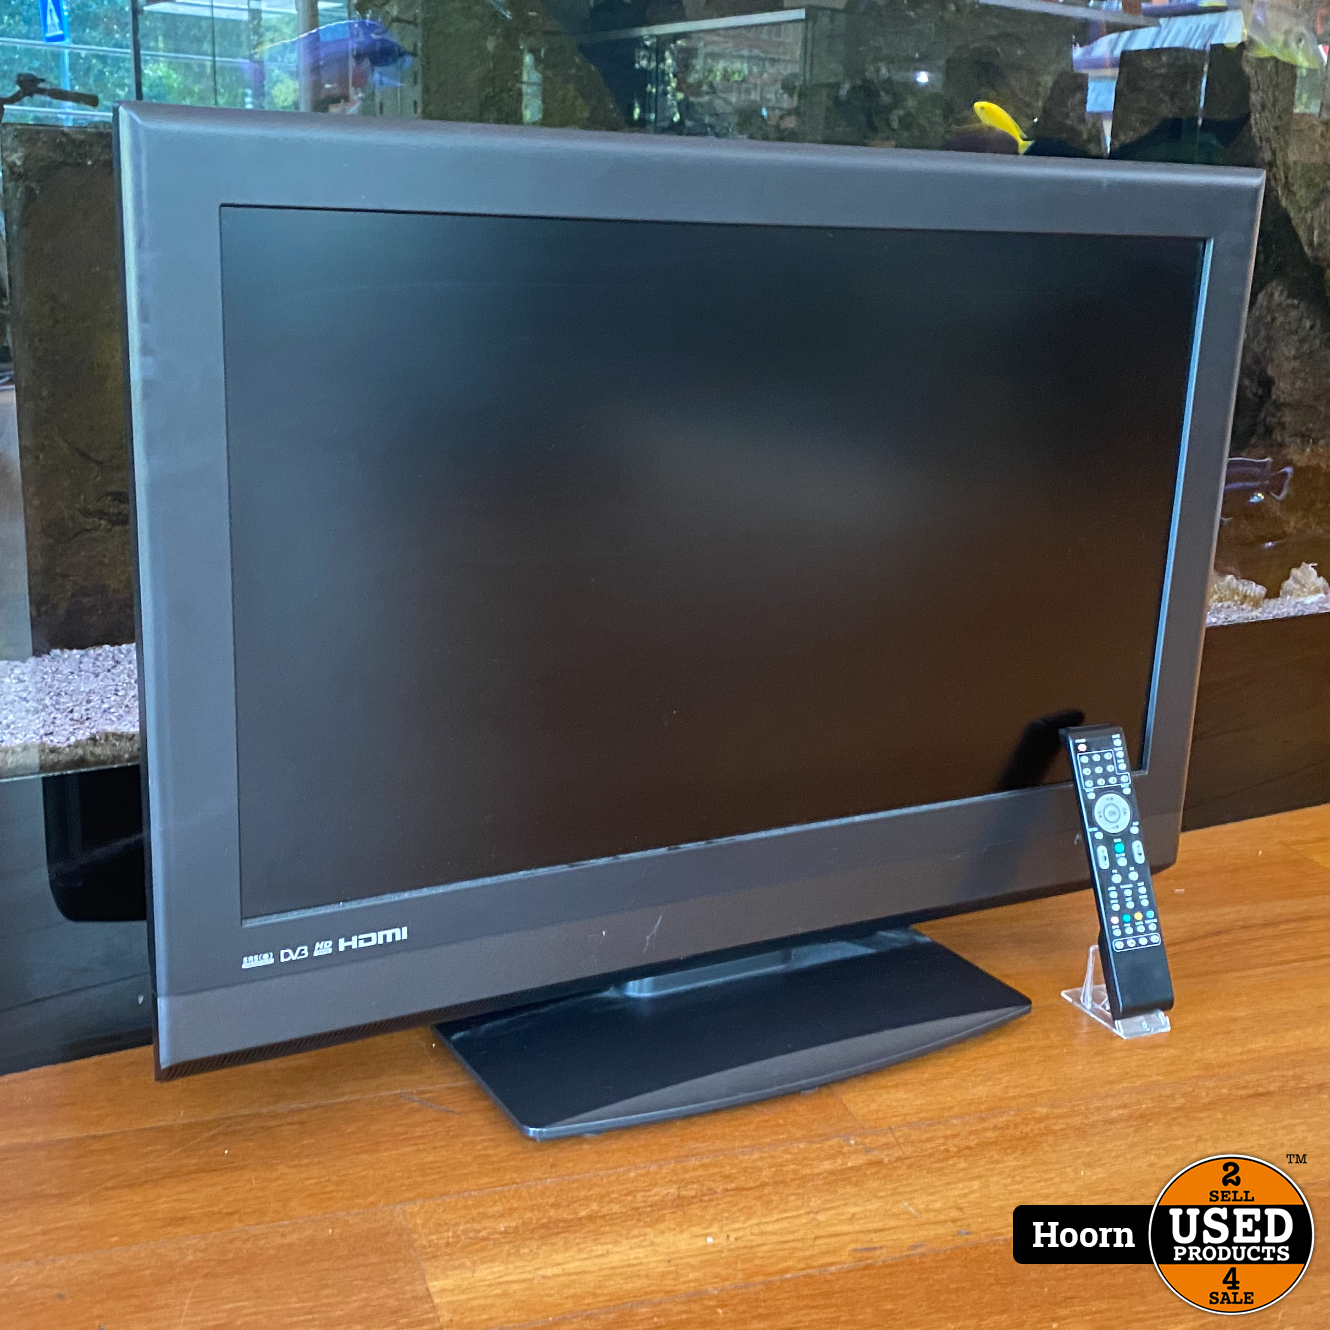 Kikker einde Naar behoren Xyno 32ECO81 32 inch HD-Ready LCD TV incl. Afstandsbediening - Used  Products Hoorn